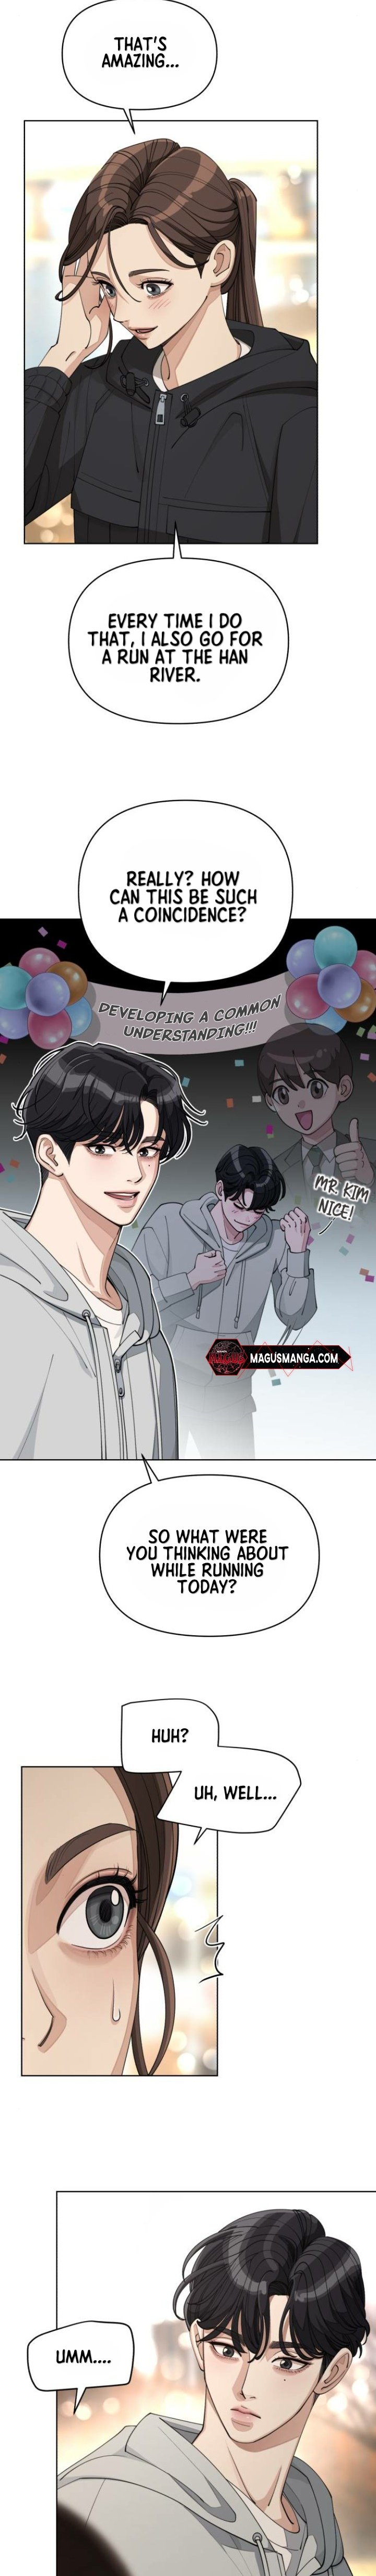 Lee Seob’s love chapter 26